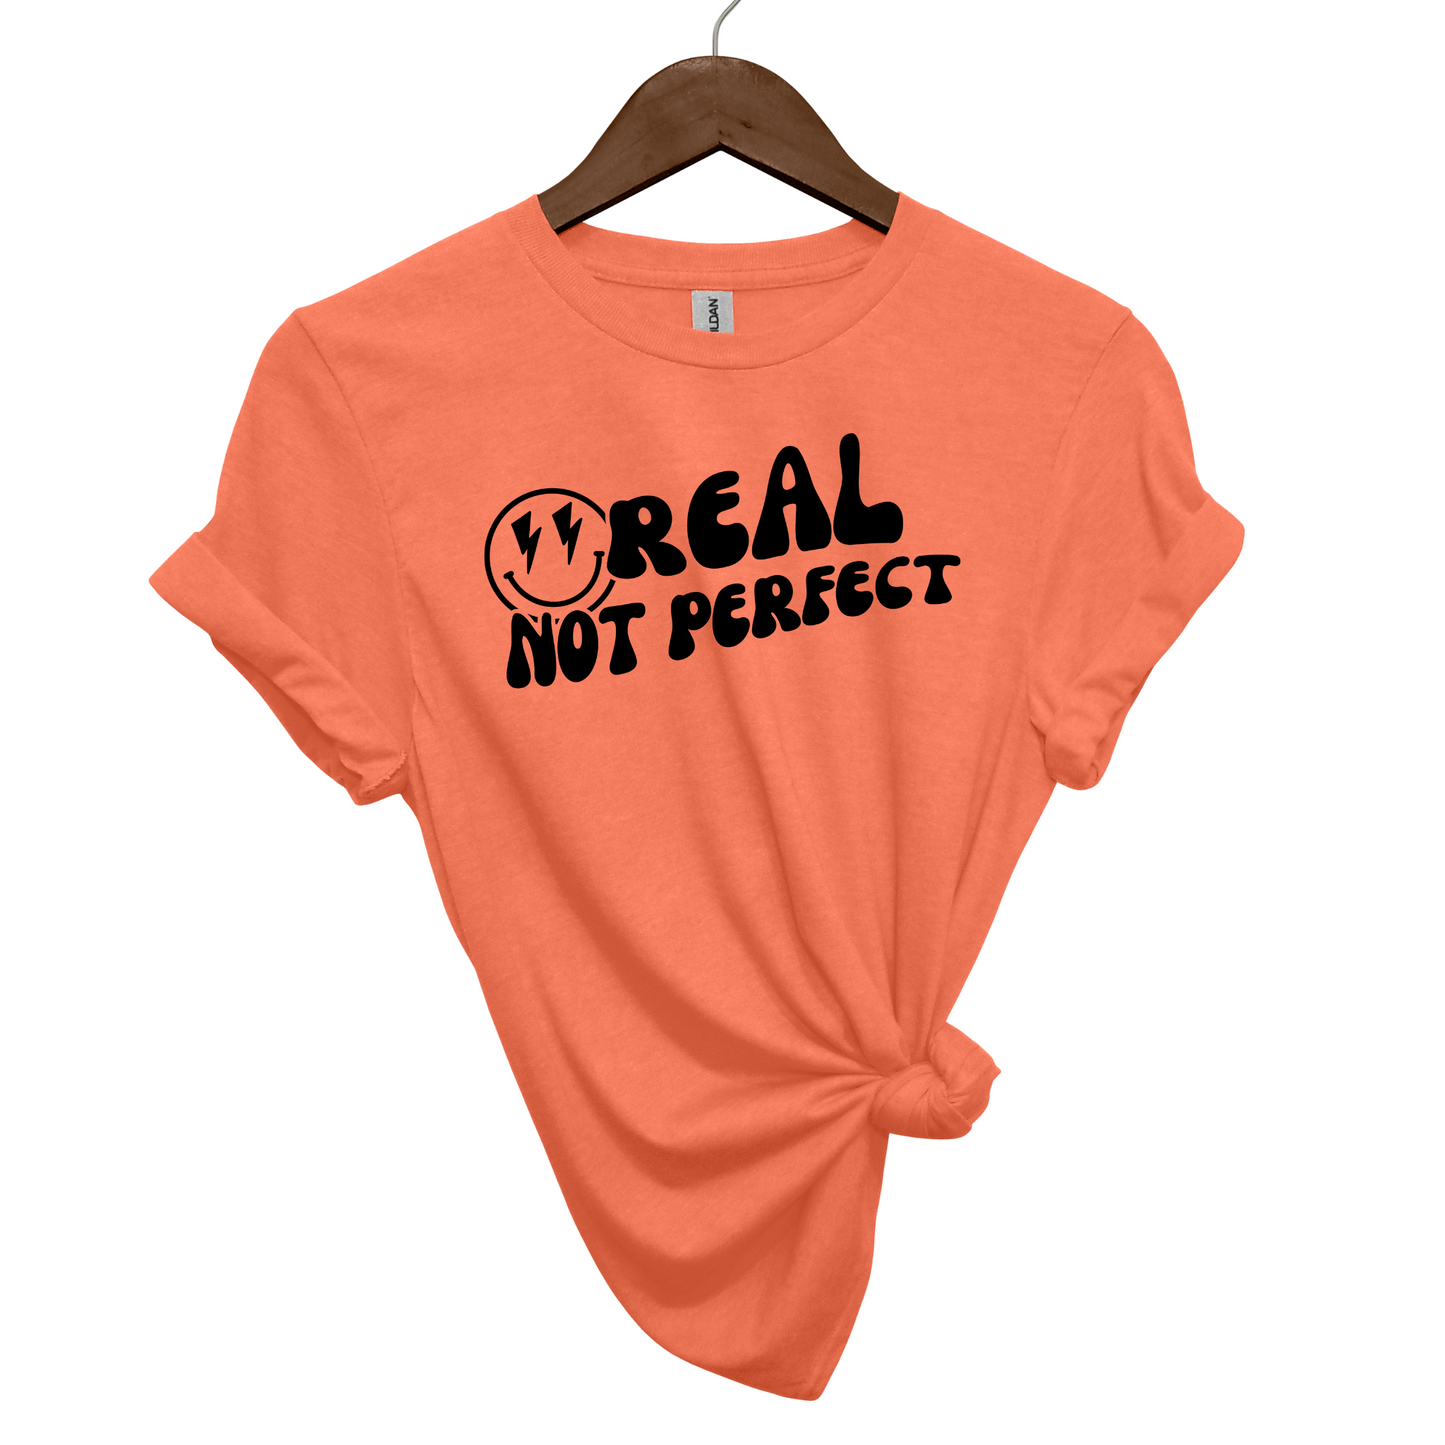 Real, Not Perfect Crewneck T Shirt heather orange